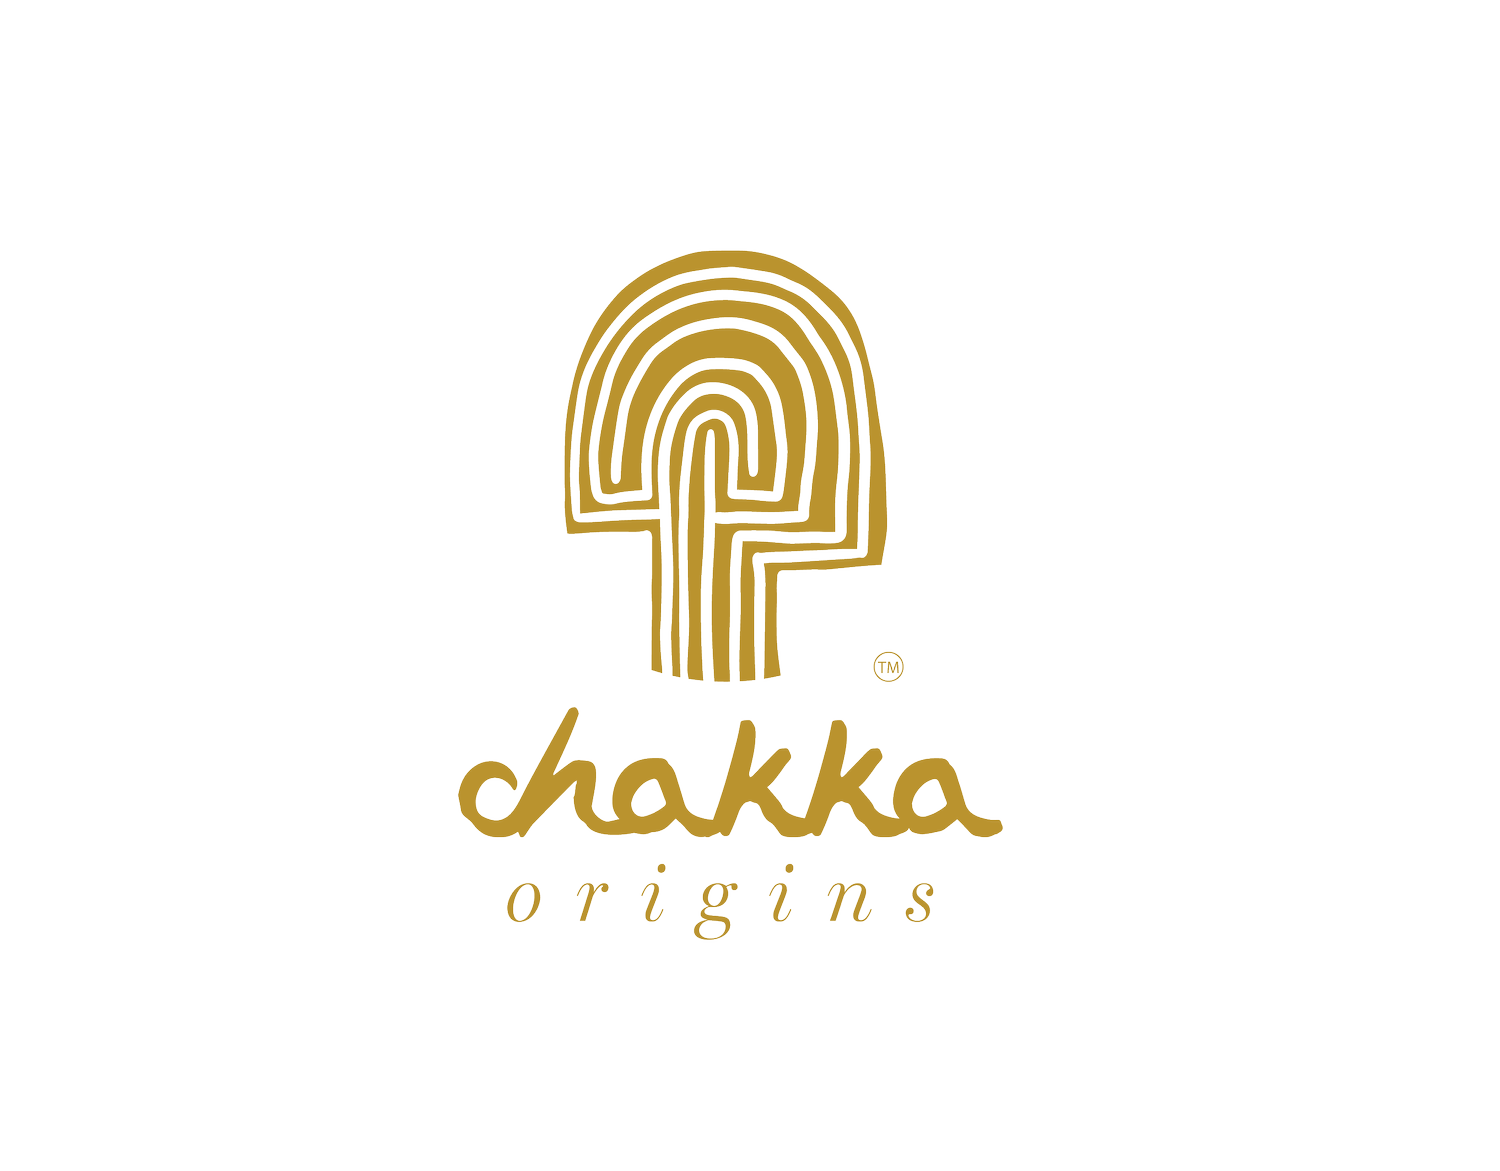 Chakka Origins